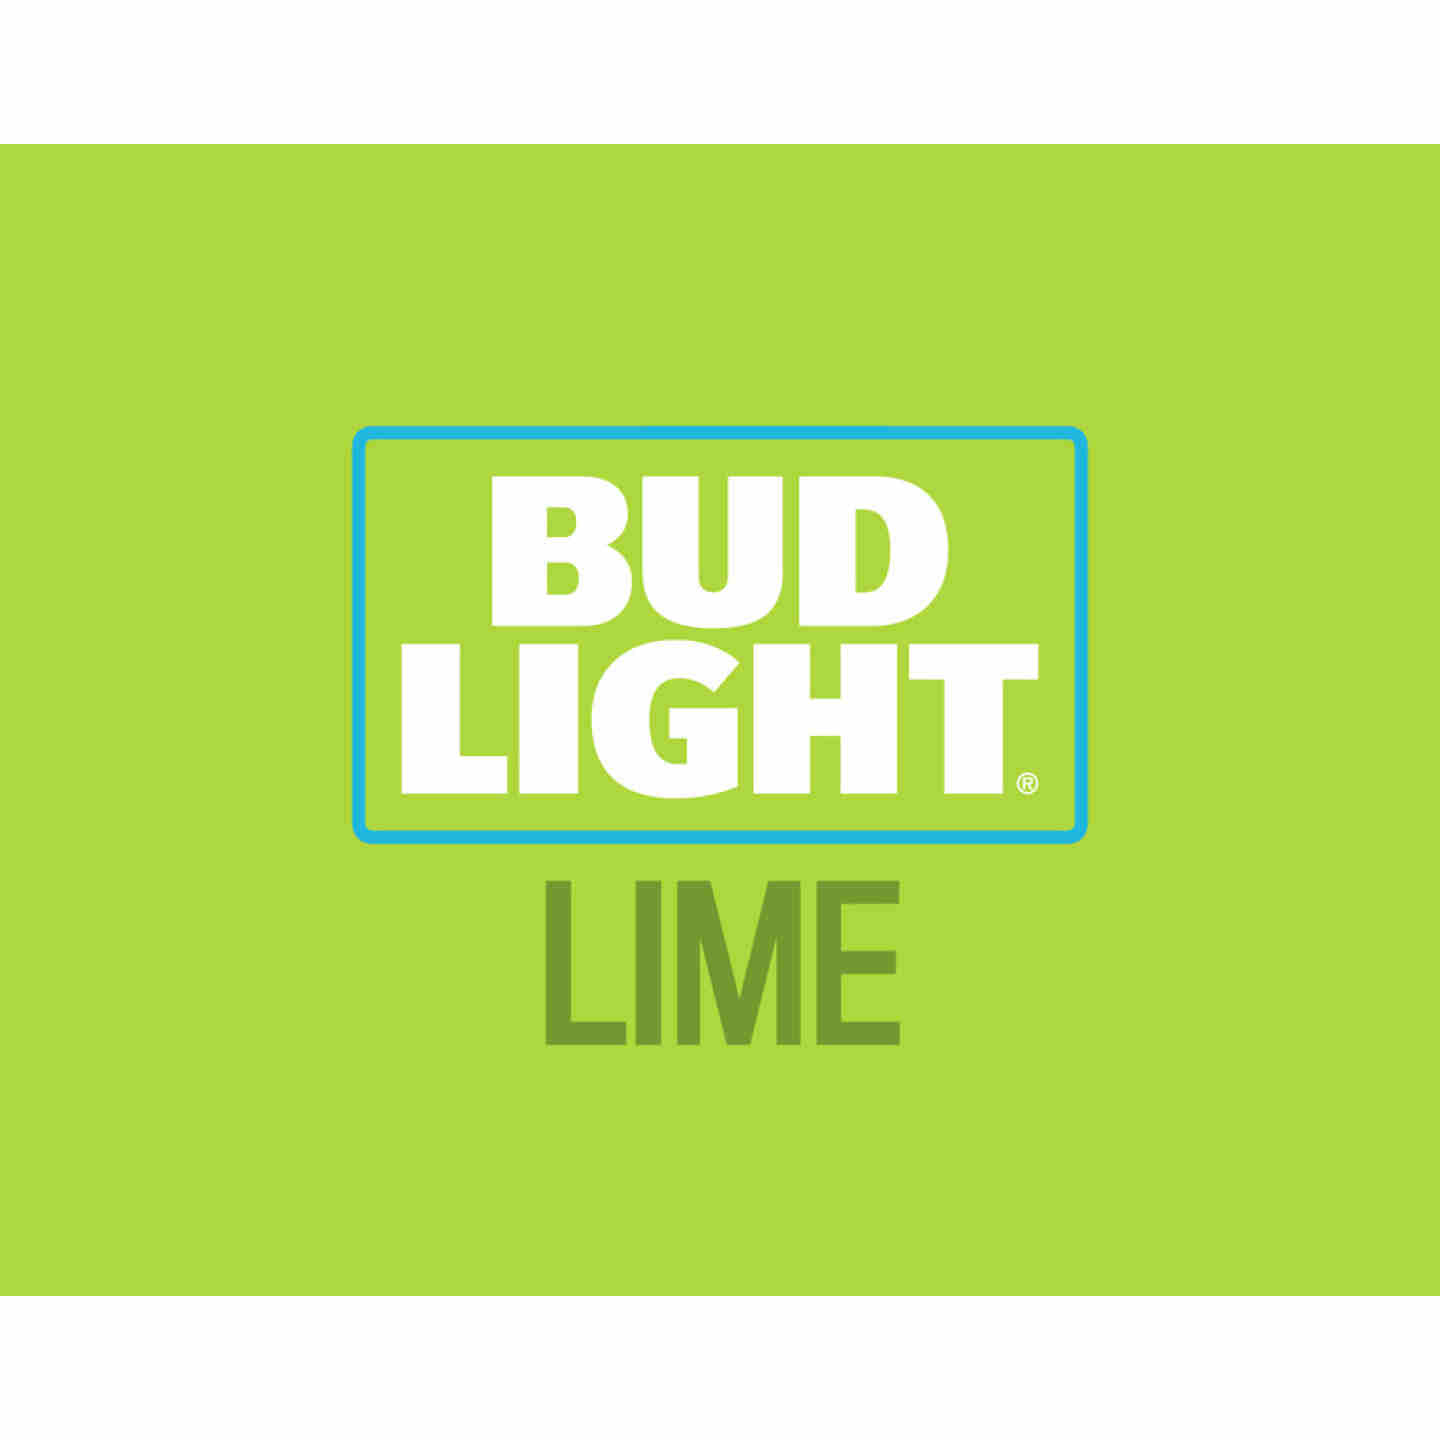 Bud Light Lime Image 1